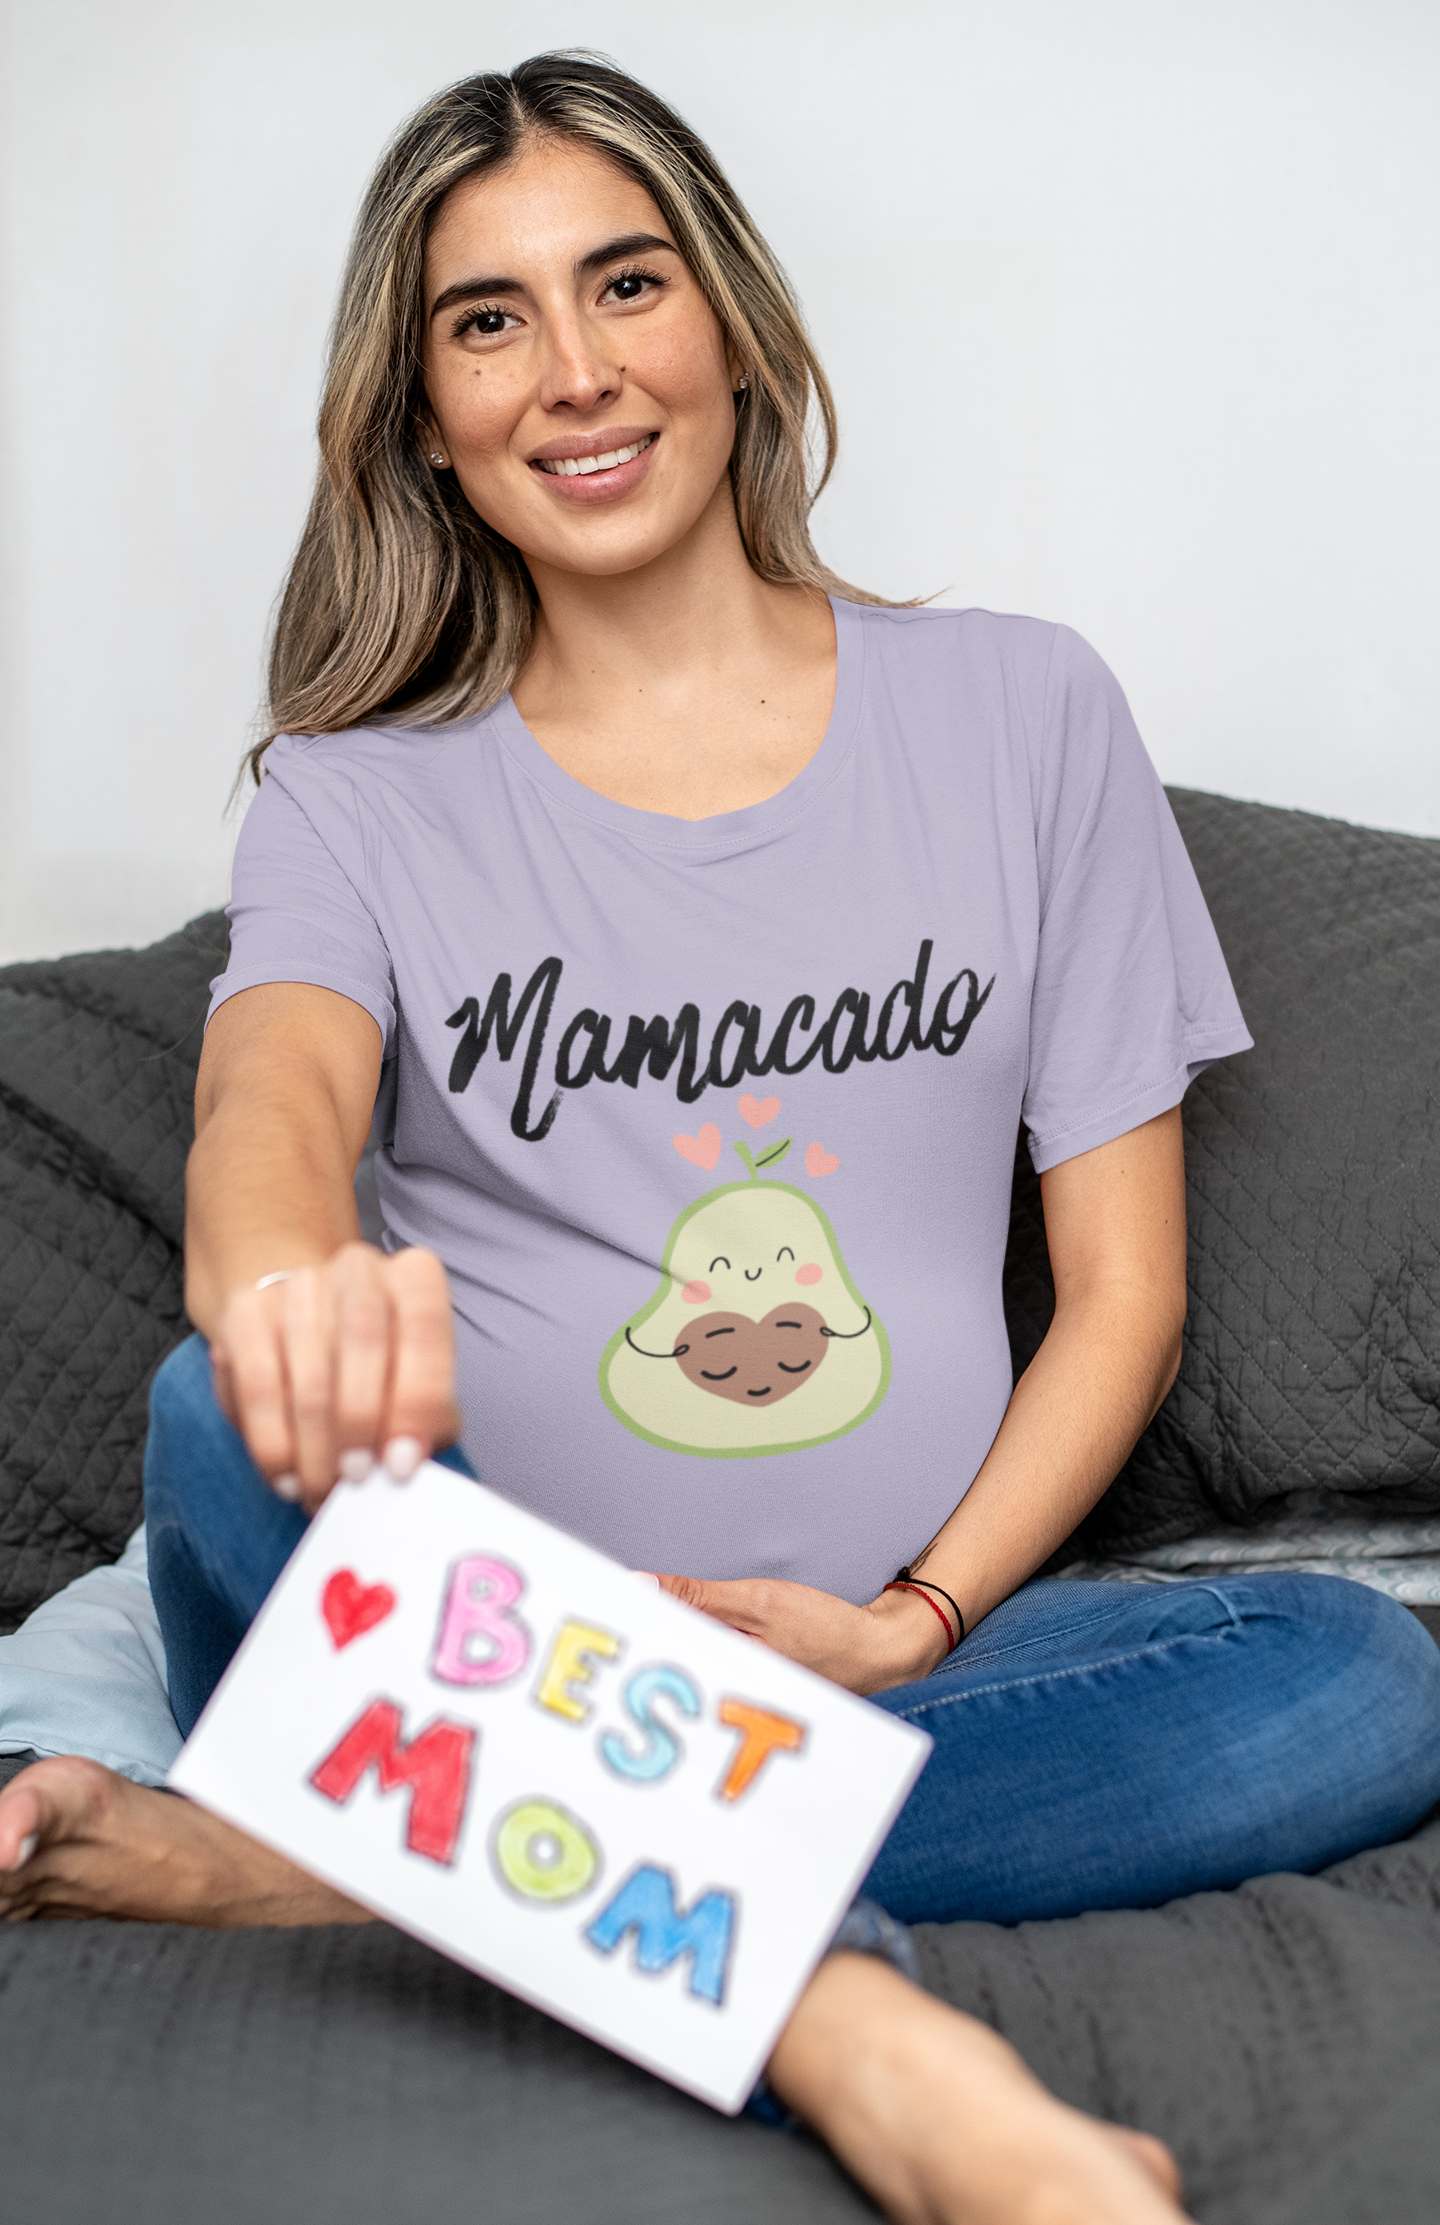 Mamacado - Oversized Pregnancy T-shirt